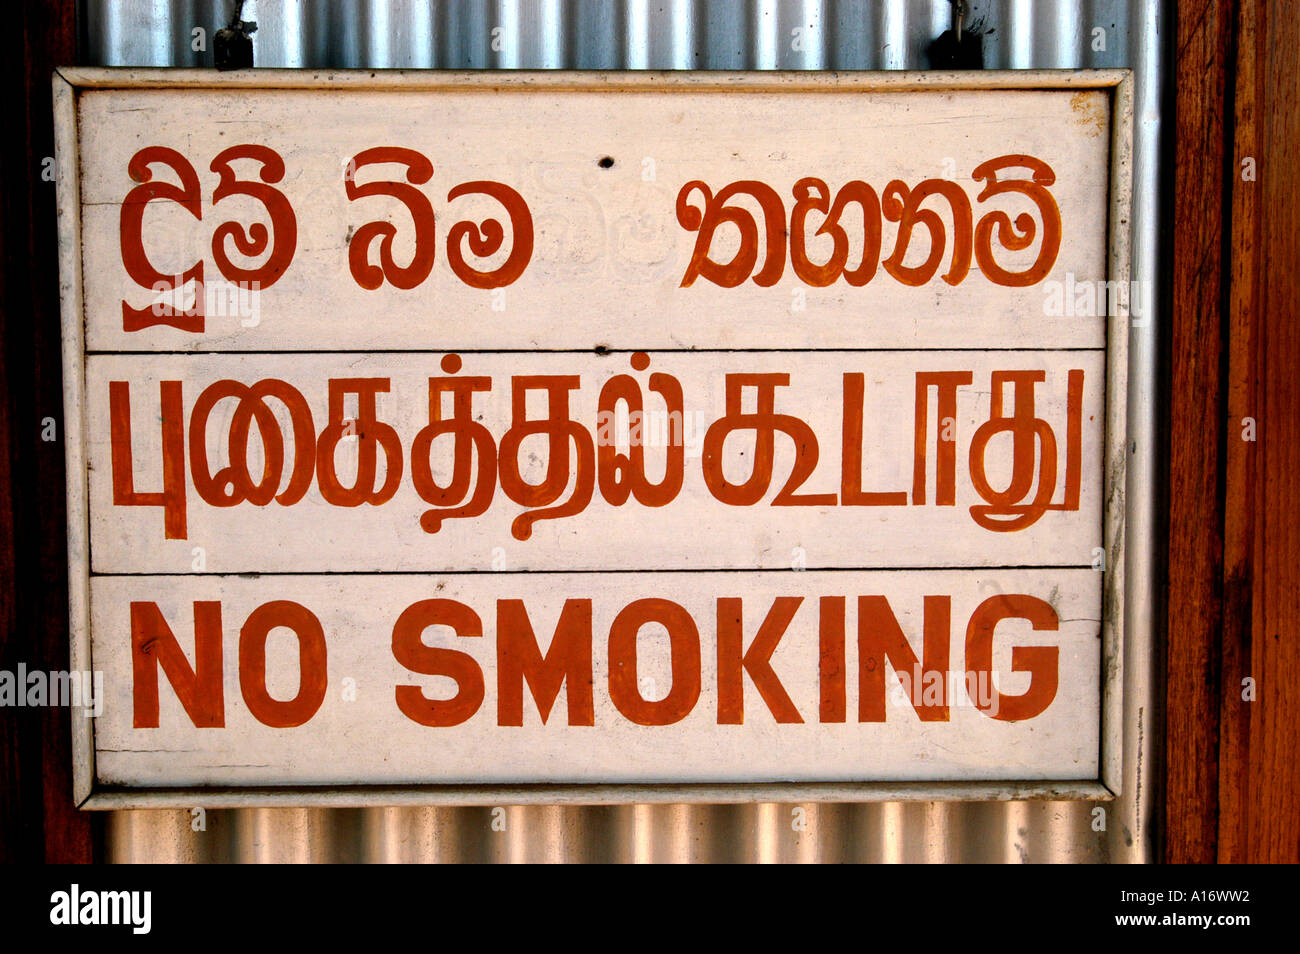 No Smoking Sri Lanka sign Stock Photo